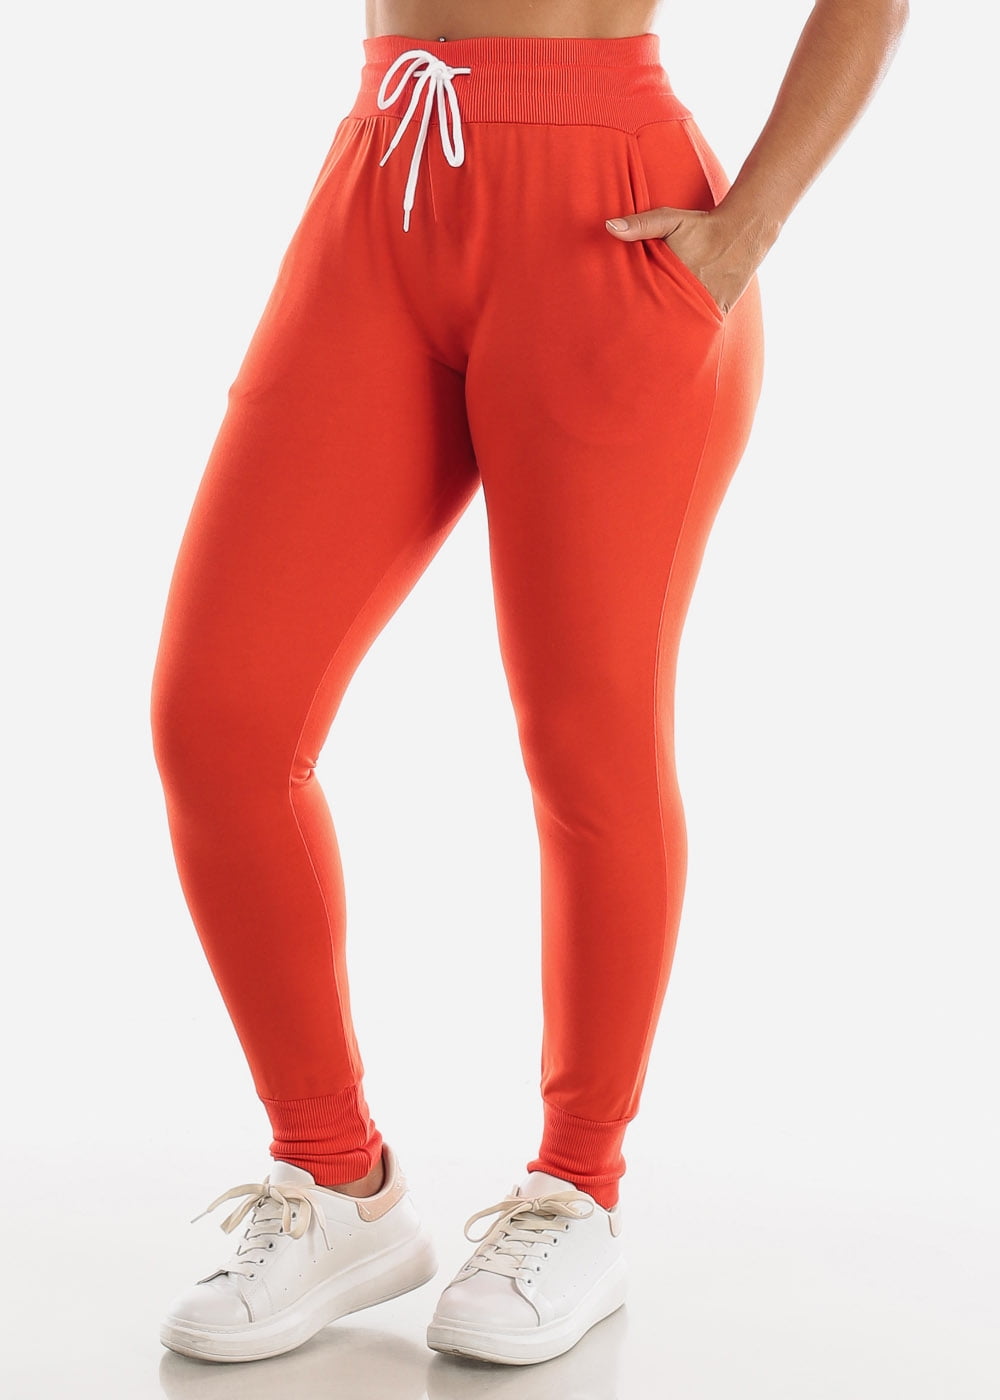 Moda Xpress - Women's Stretchy Athleisure Loungewear Sports High Rise ...